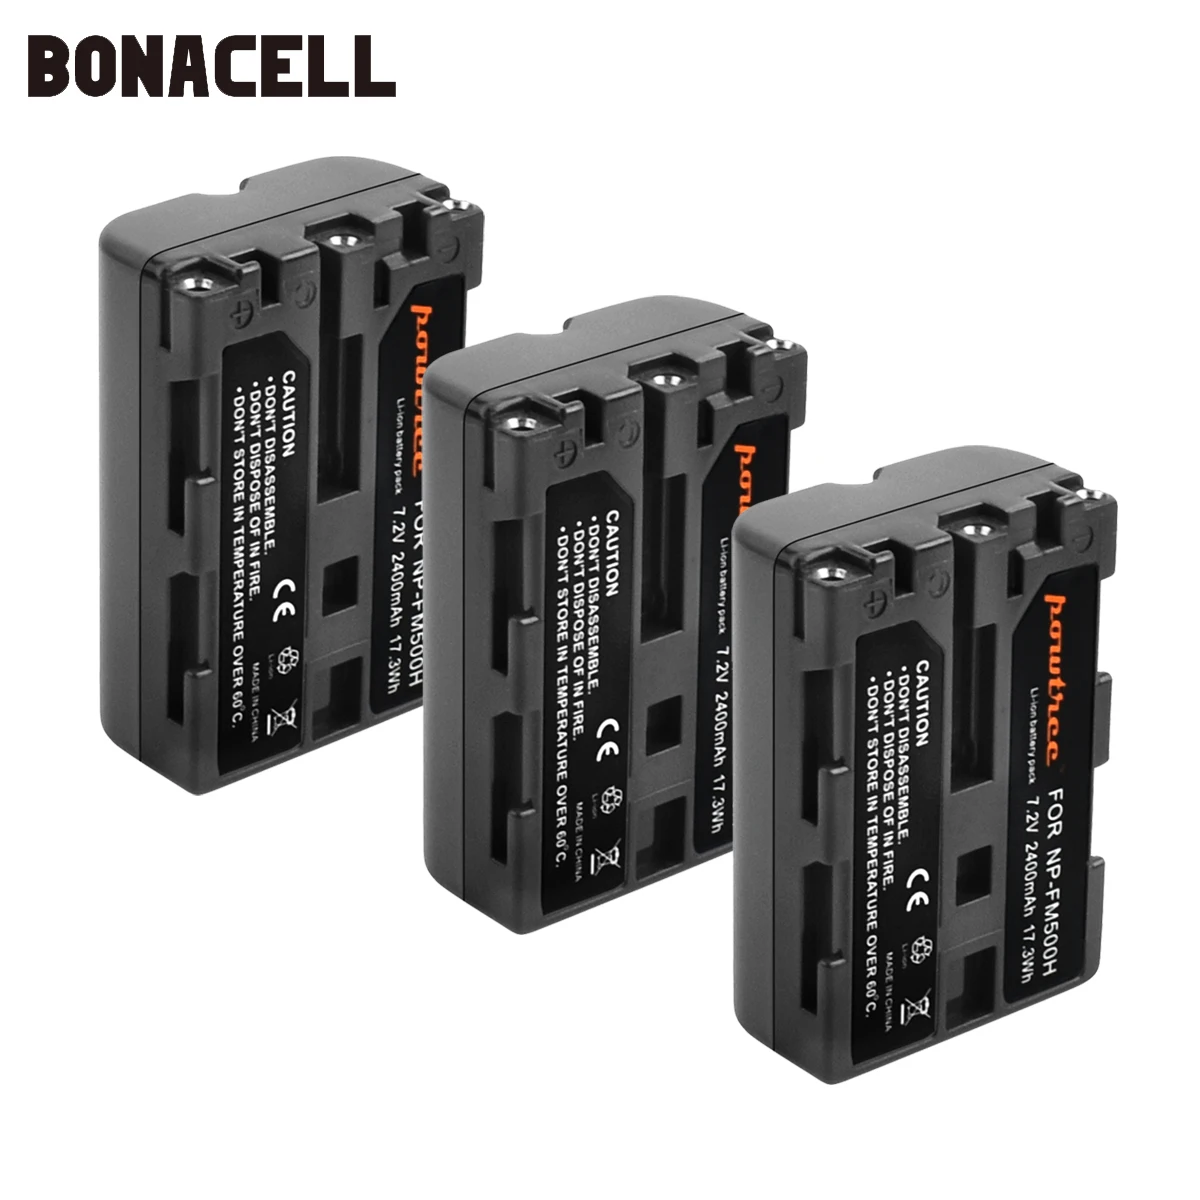 Bonacell 2400 мА/ч, NP-FM500H NP FM500H NPFM500H Камера Батарея для sony A57 A58 A65 A77 A99 A550 A560 A580 Батарея L50 - Цвет: 3 Pack Battery